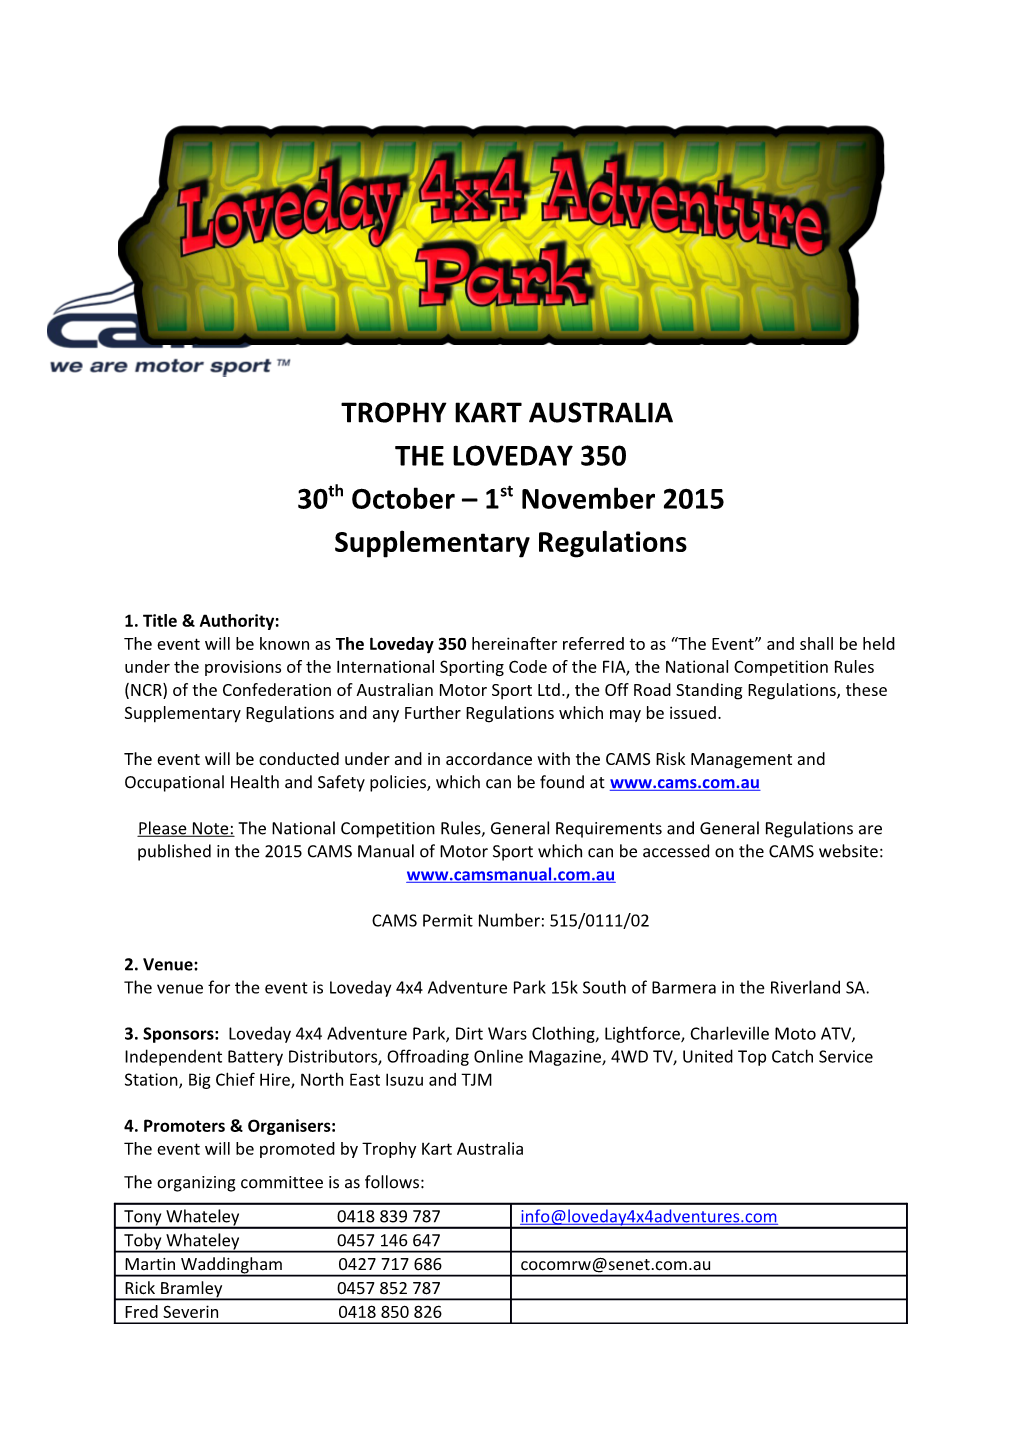 Trophy Kart Australia